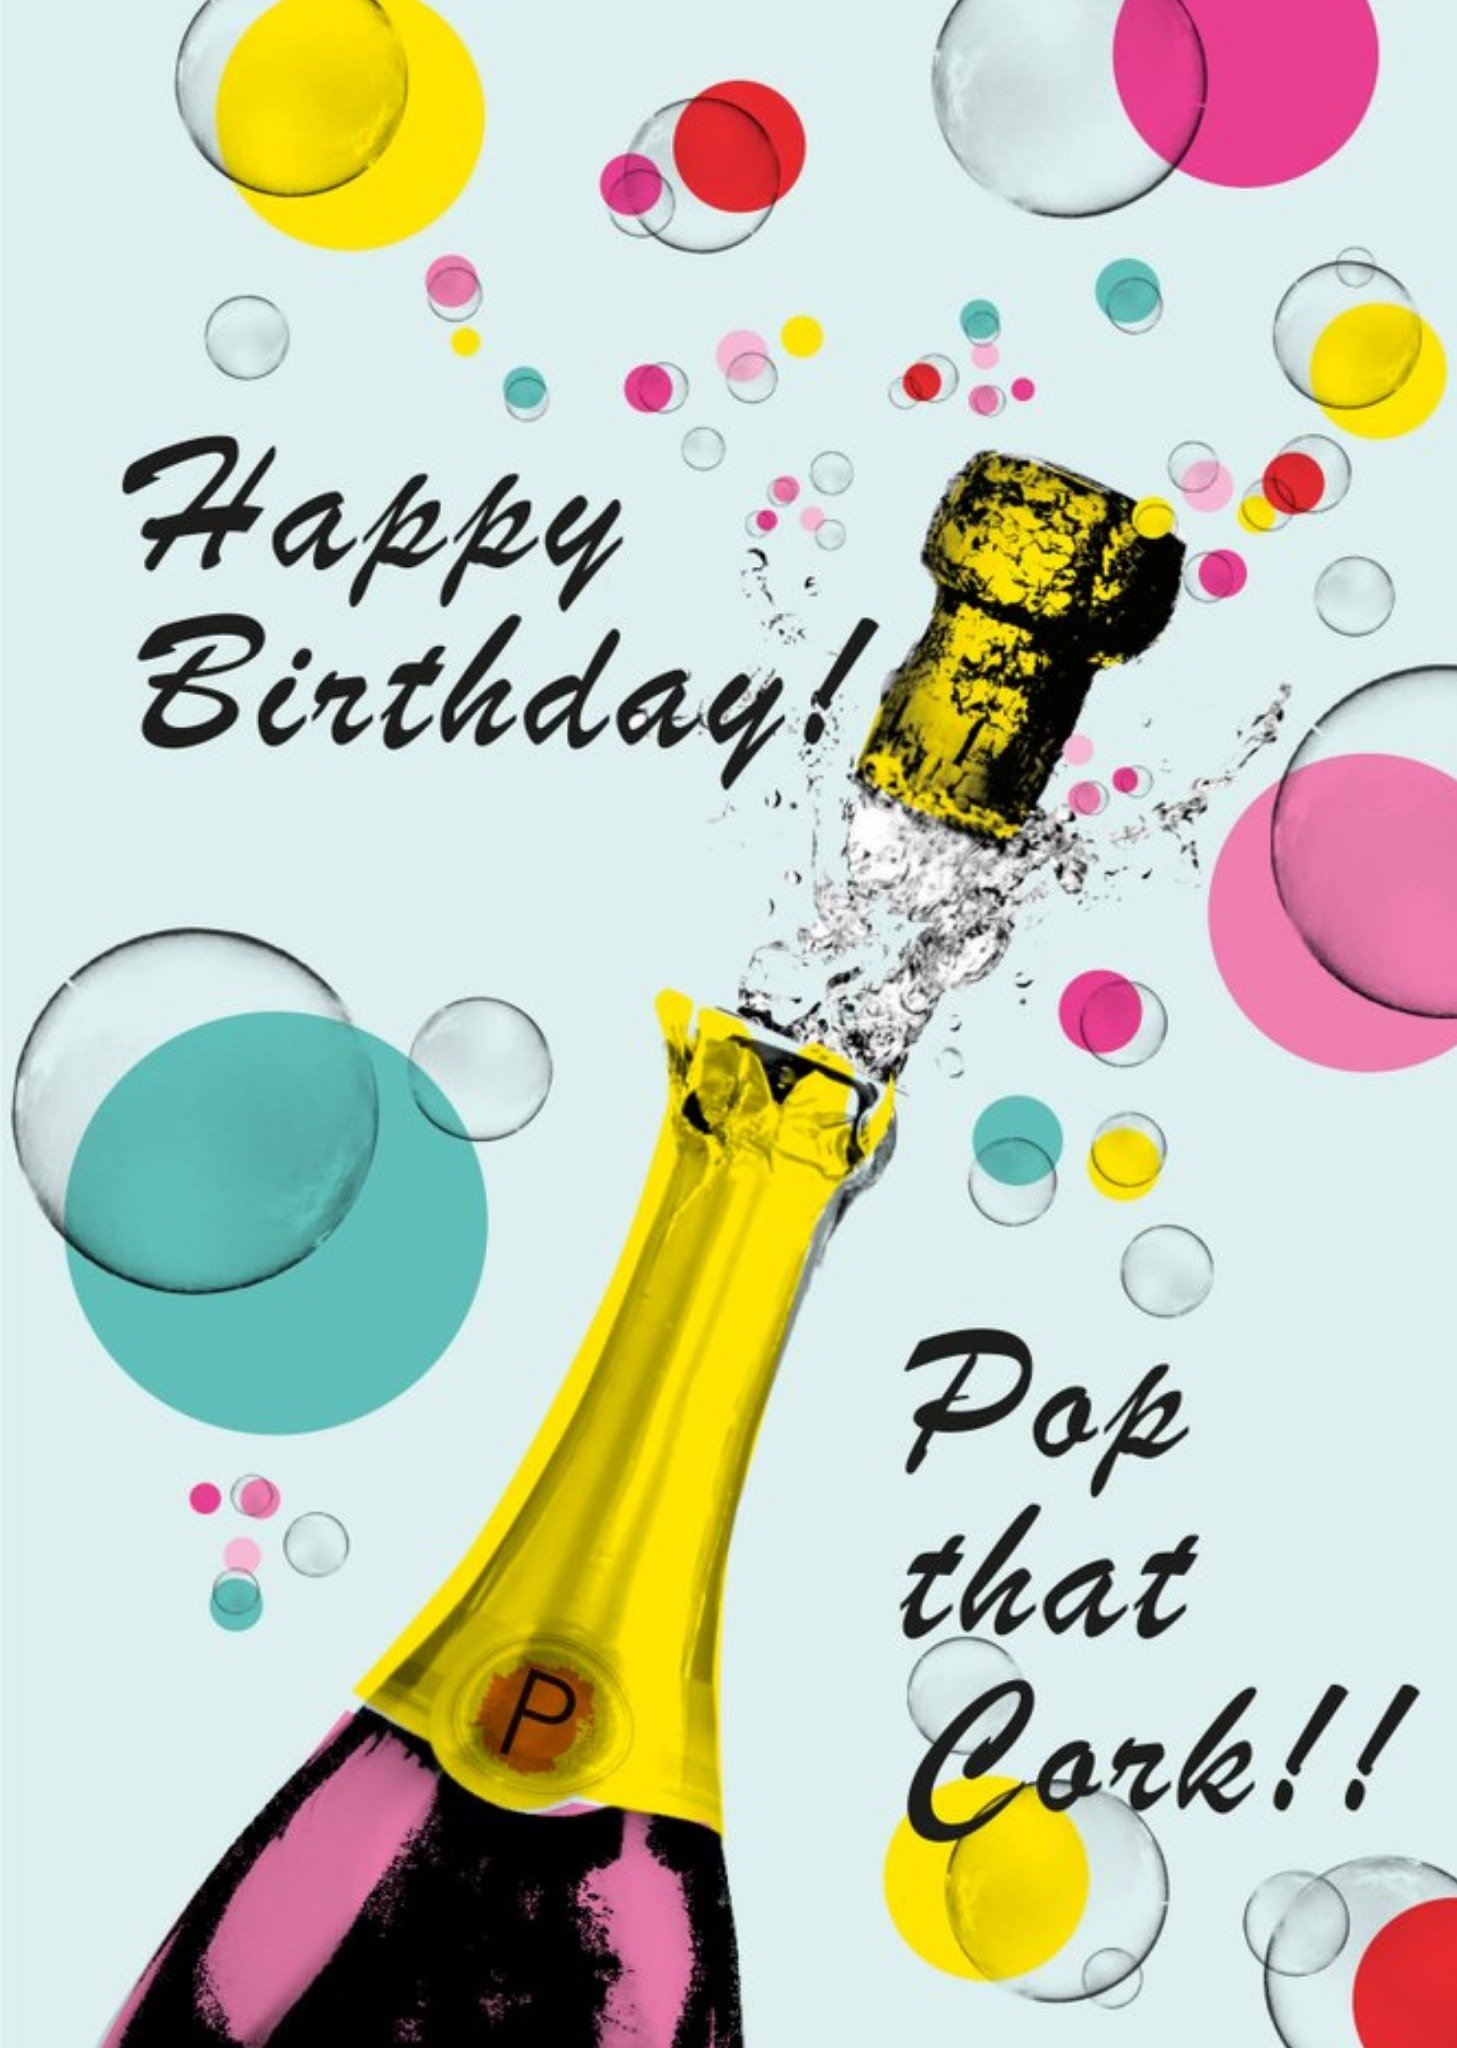 Moonpig Champagne Bottle Pop That Cork Birthday Card Ecard